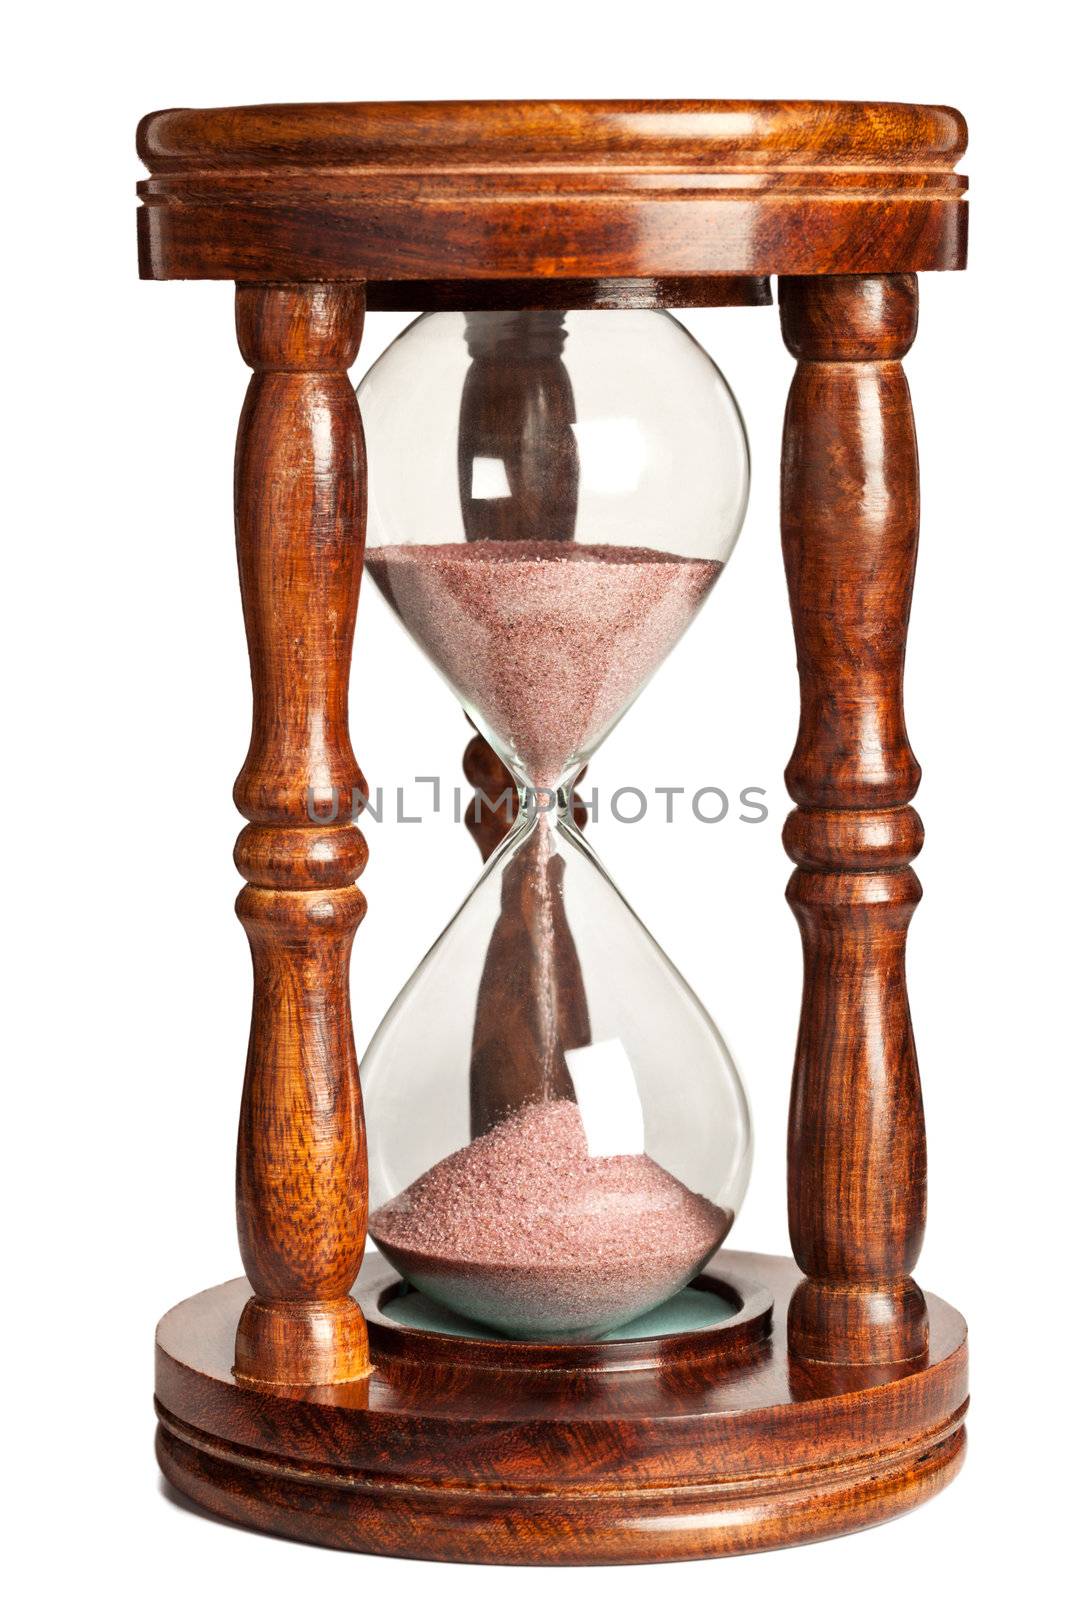 Hourglass  by dimol